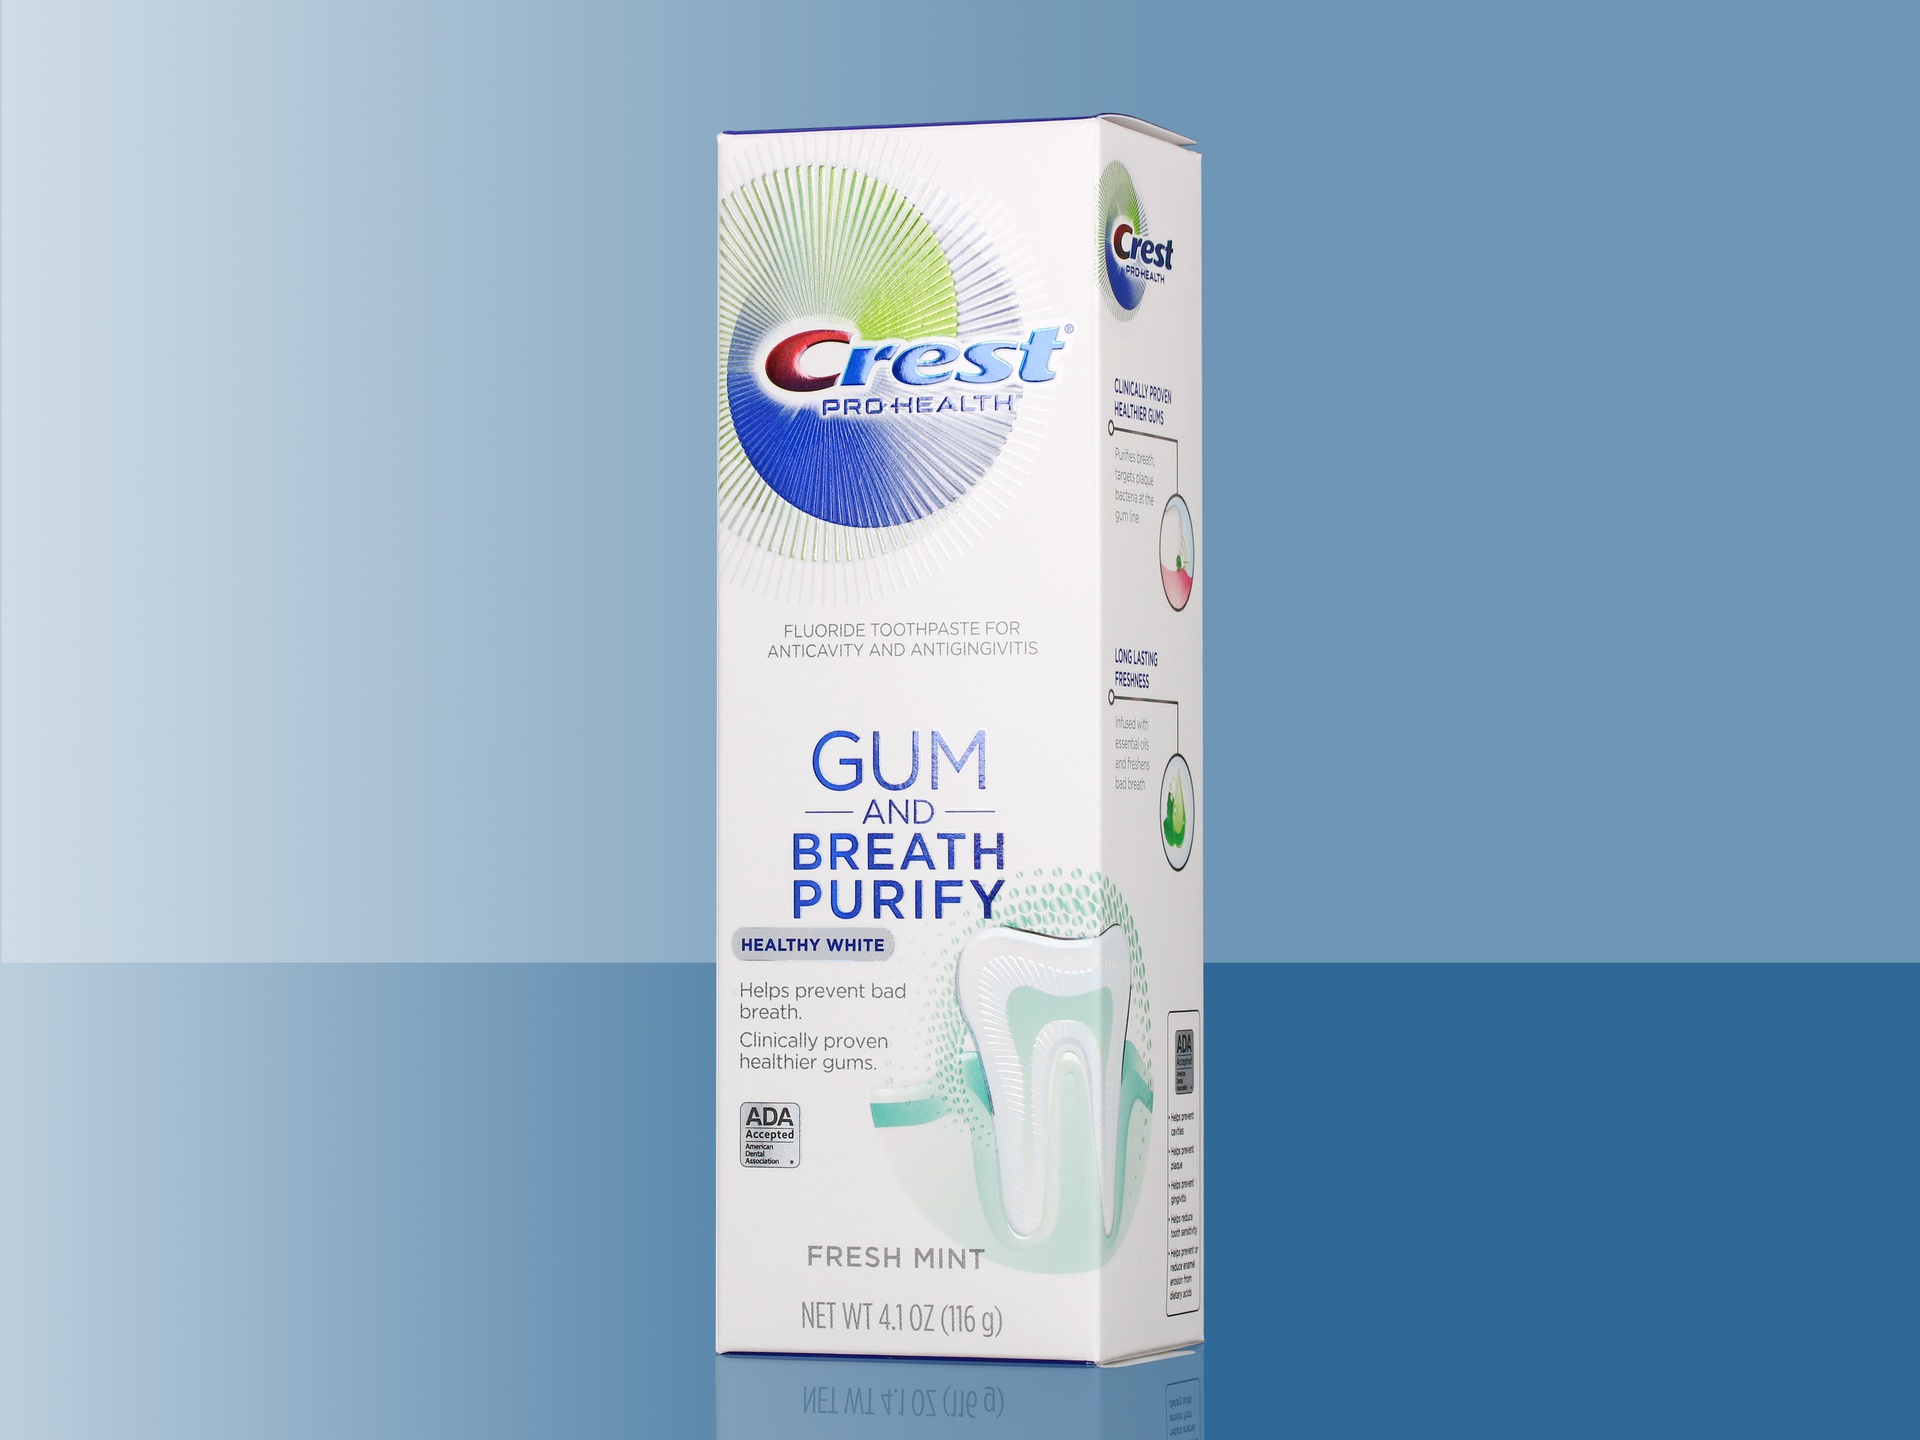 Crest Gum & Breath Purify Healthy White packaging